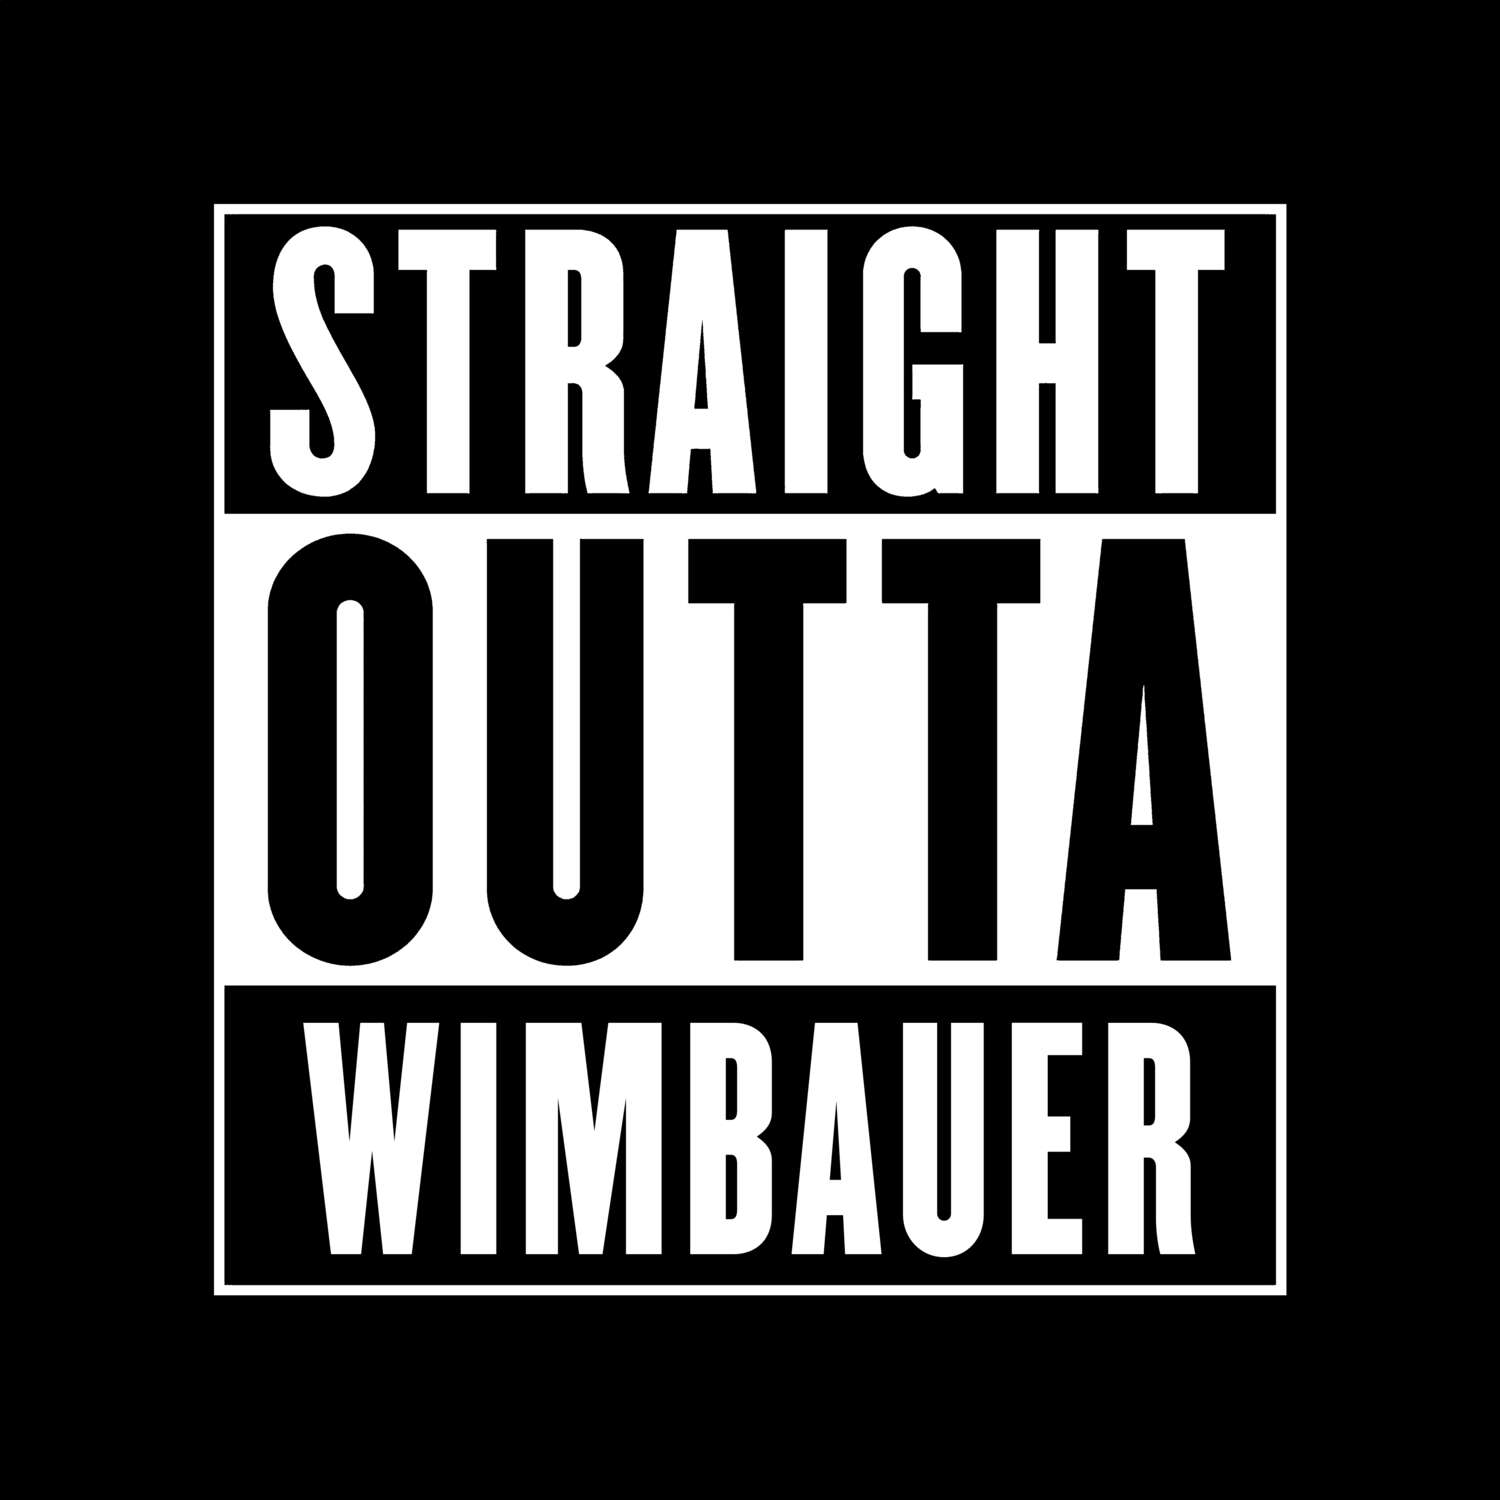 Wimbauer T-Shirt »Straight Outta«